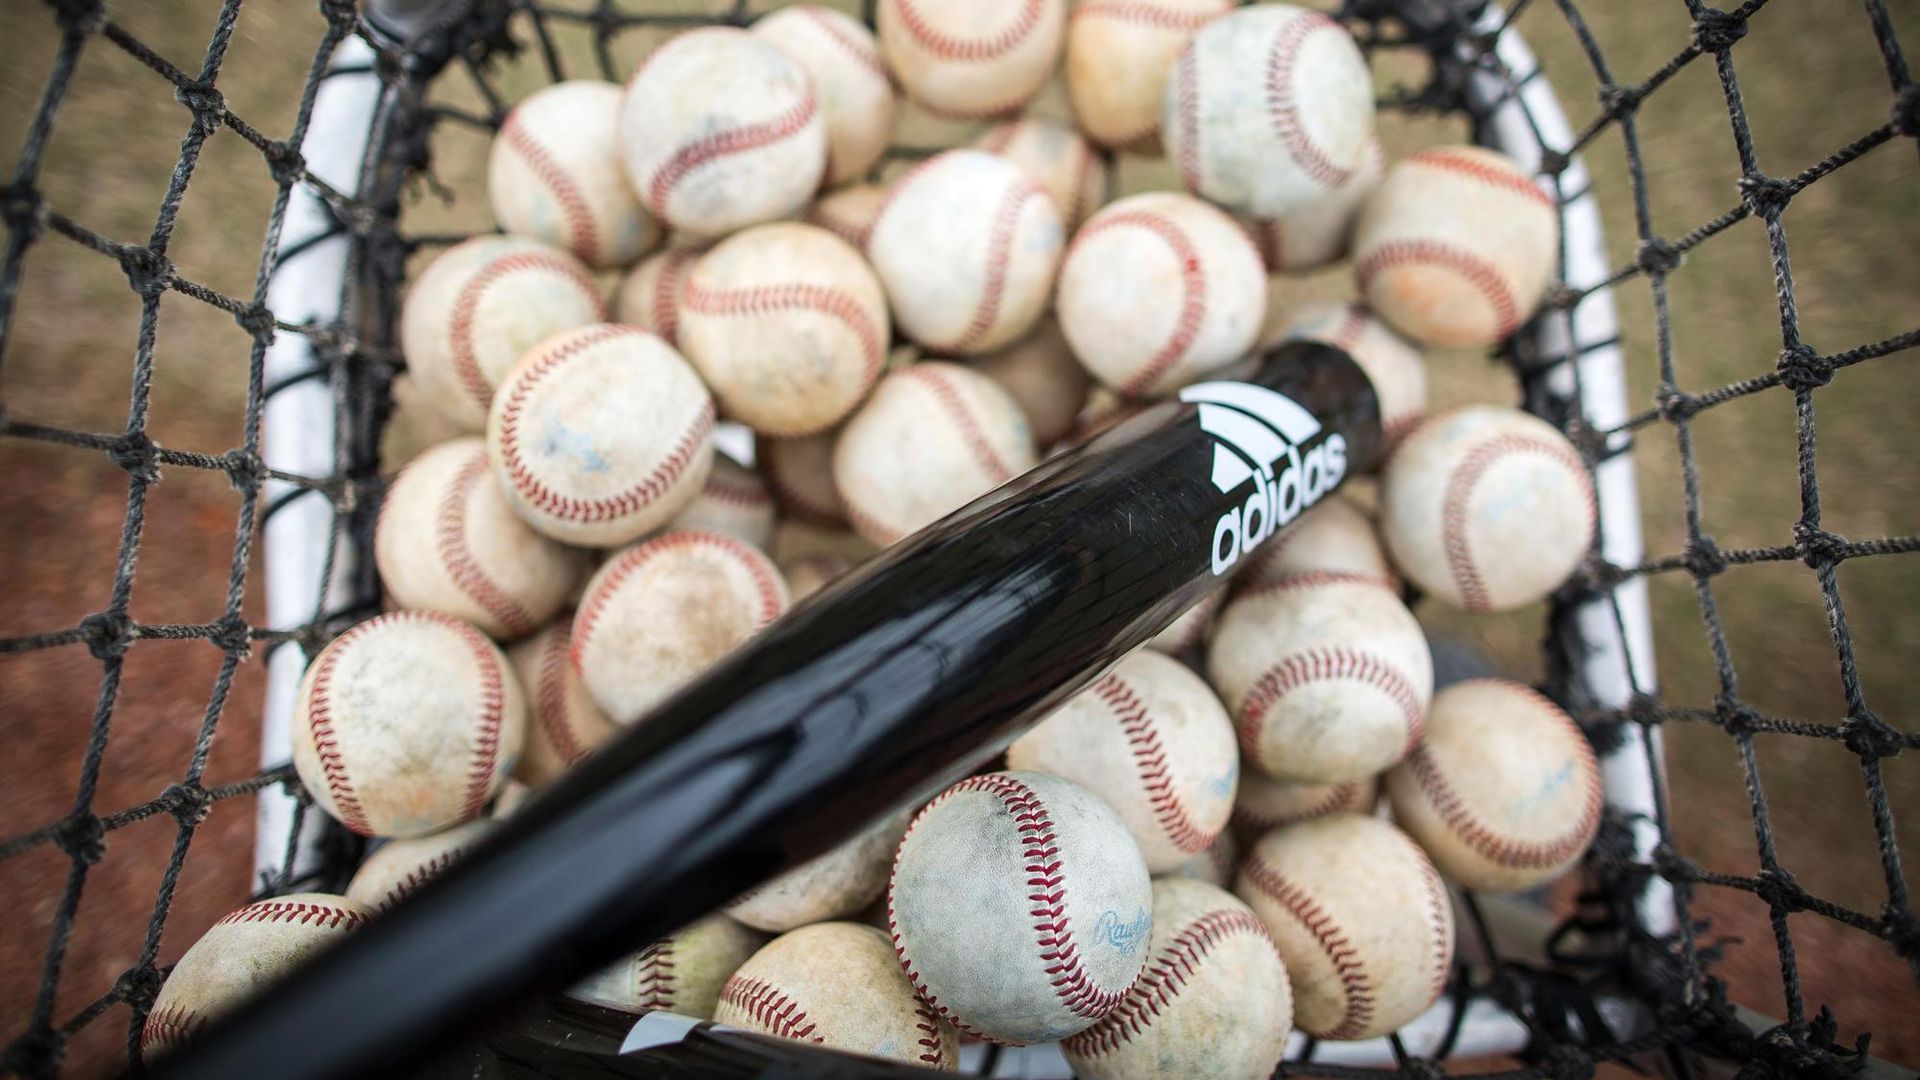 Entercom and Miami Baseball Announce Multi-Year Agreement